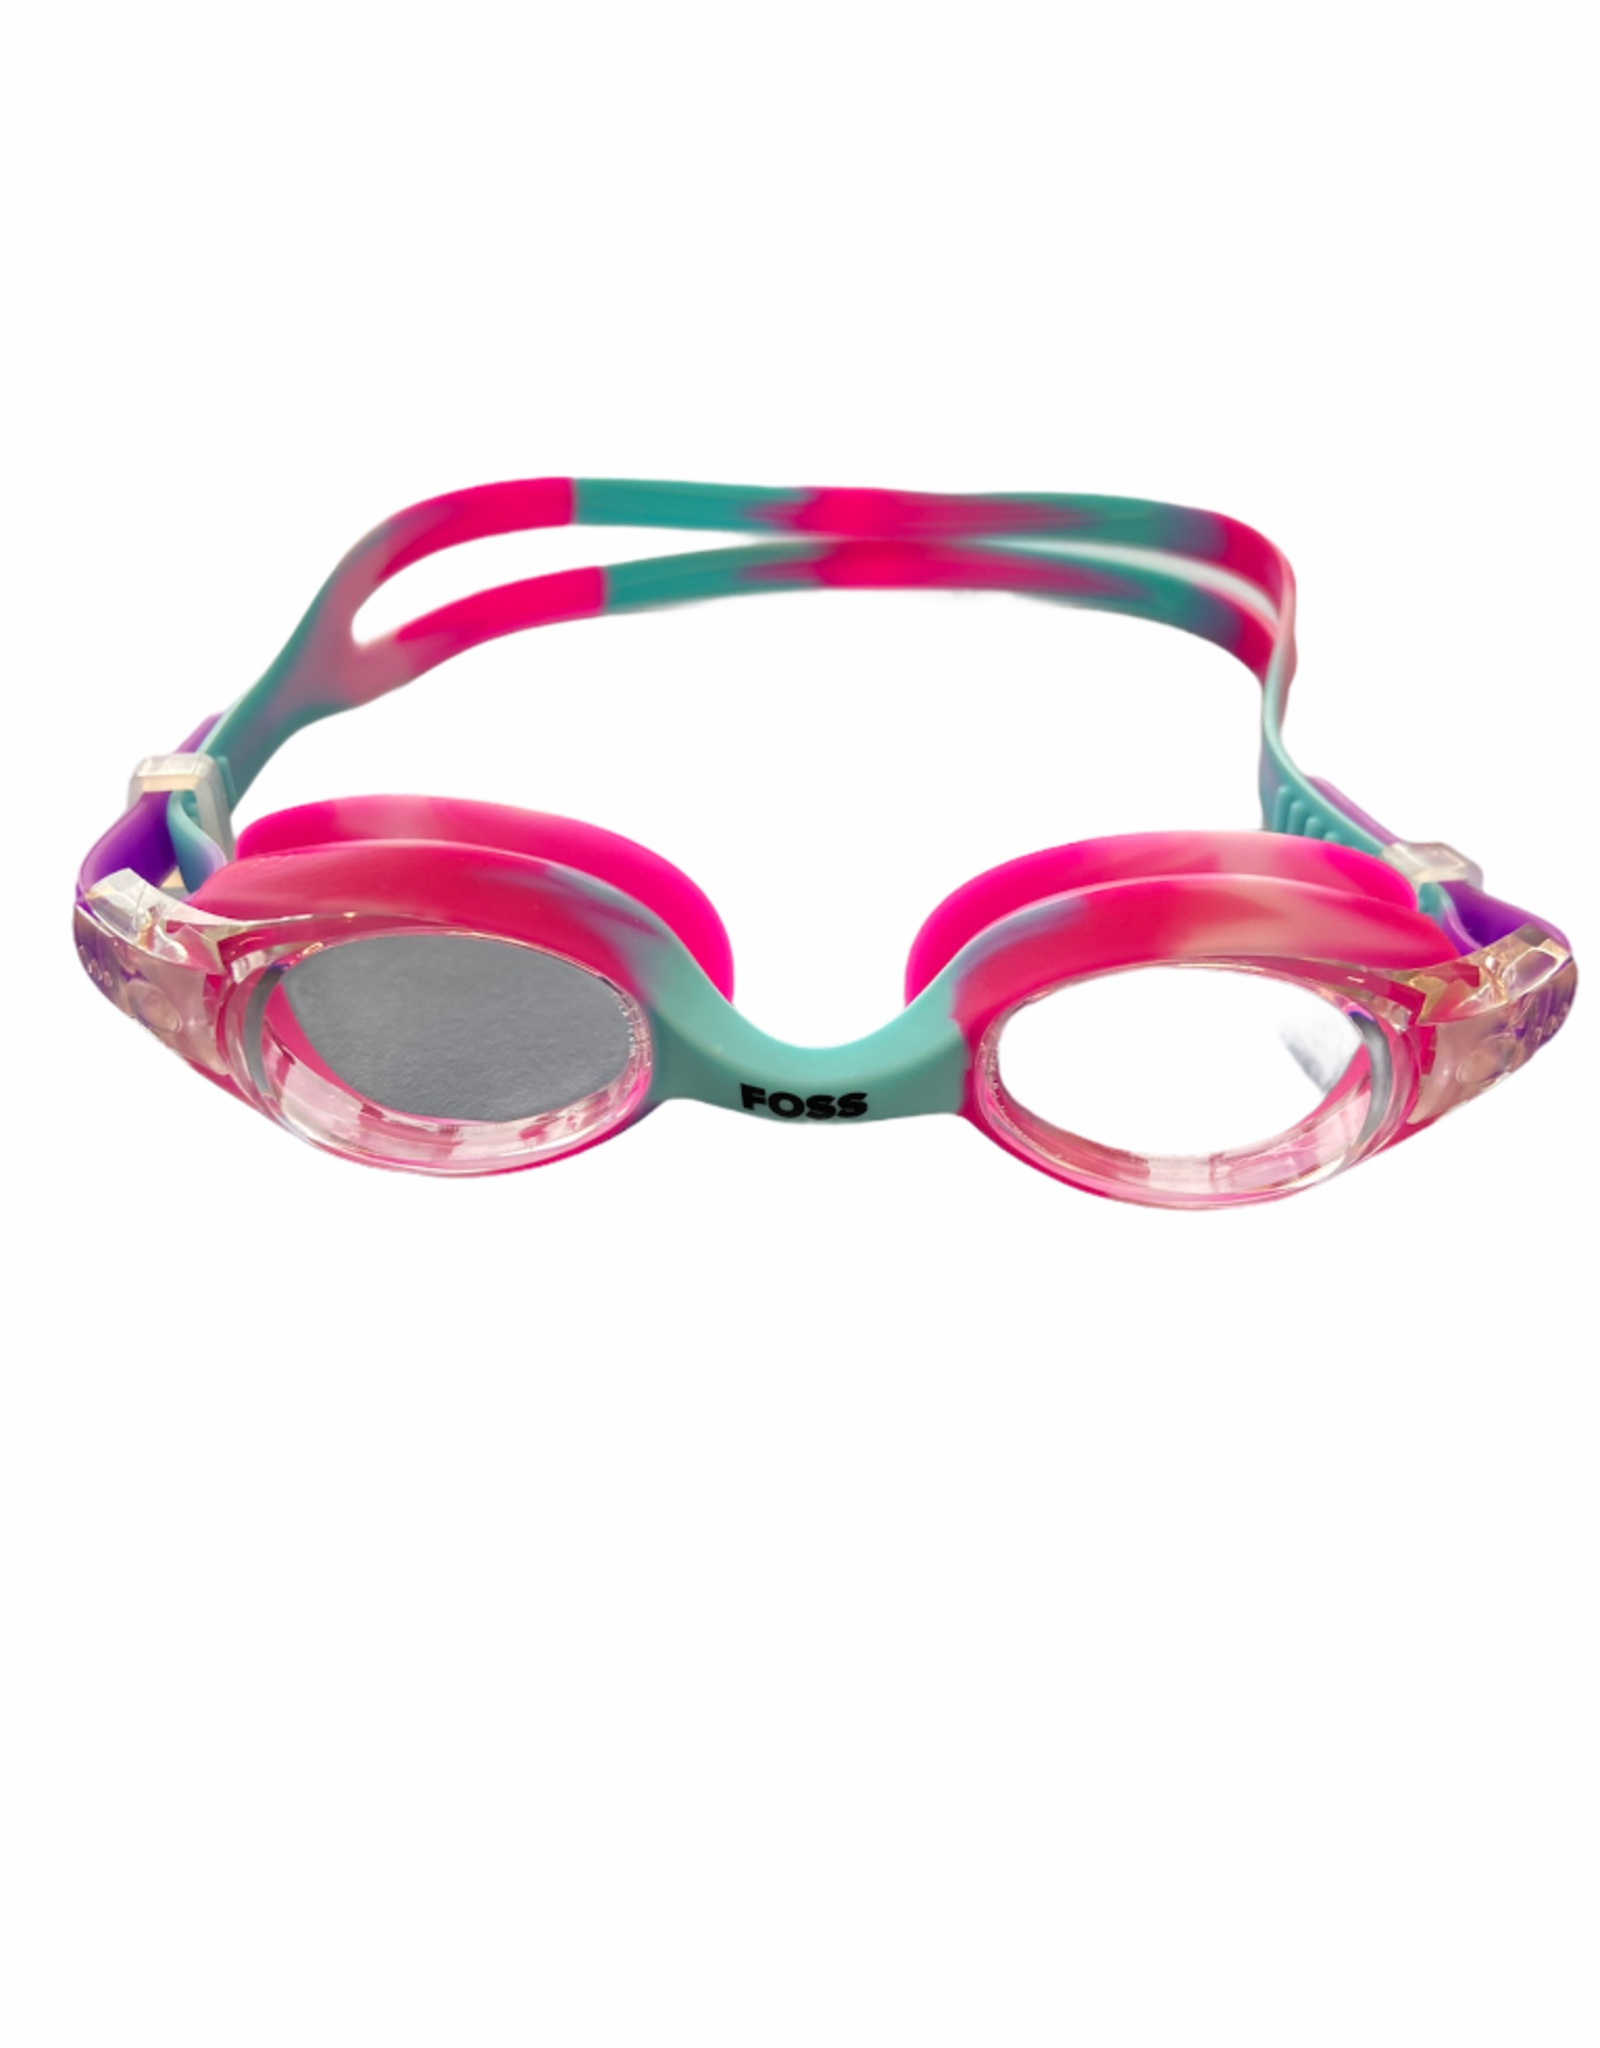 FOSS Goggle - Pink Tie Dye